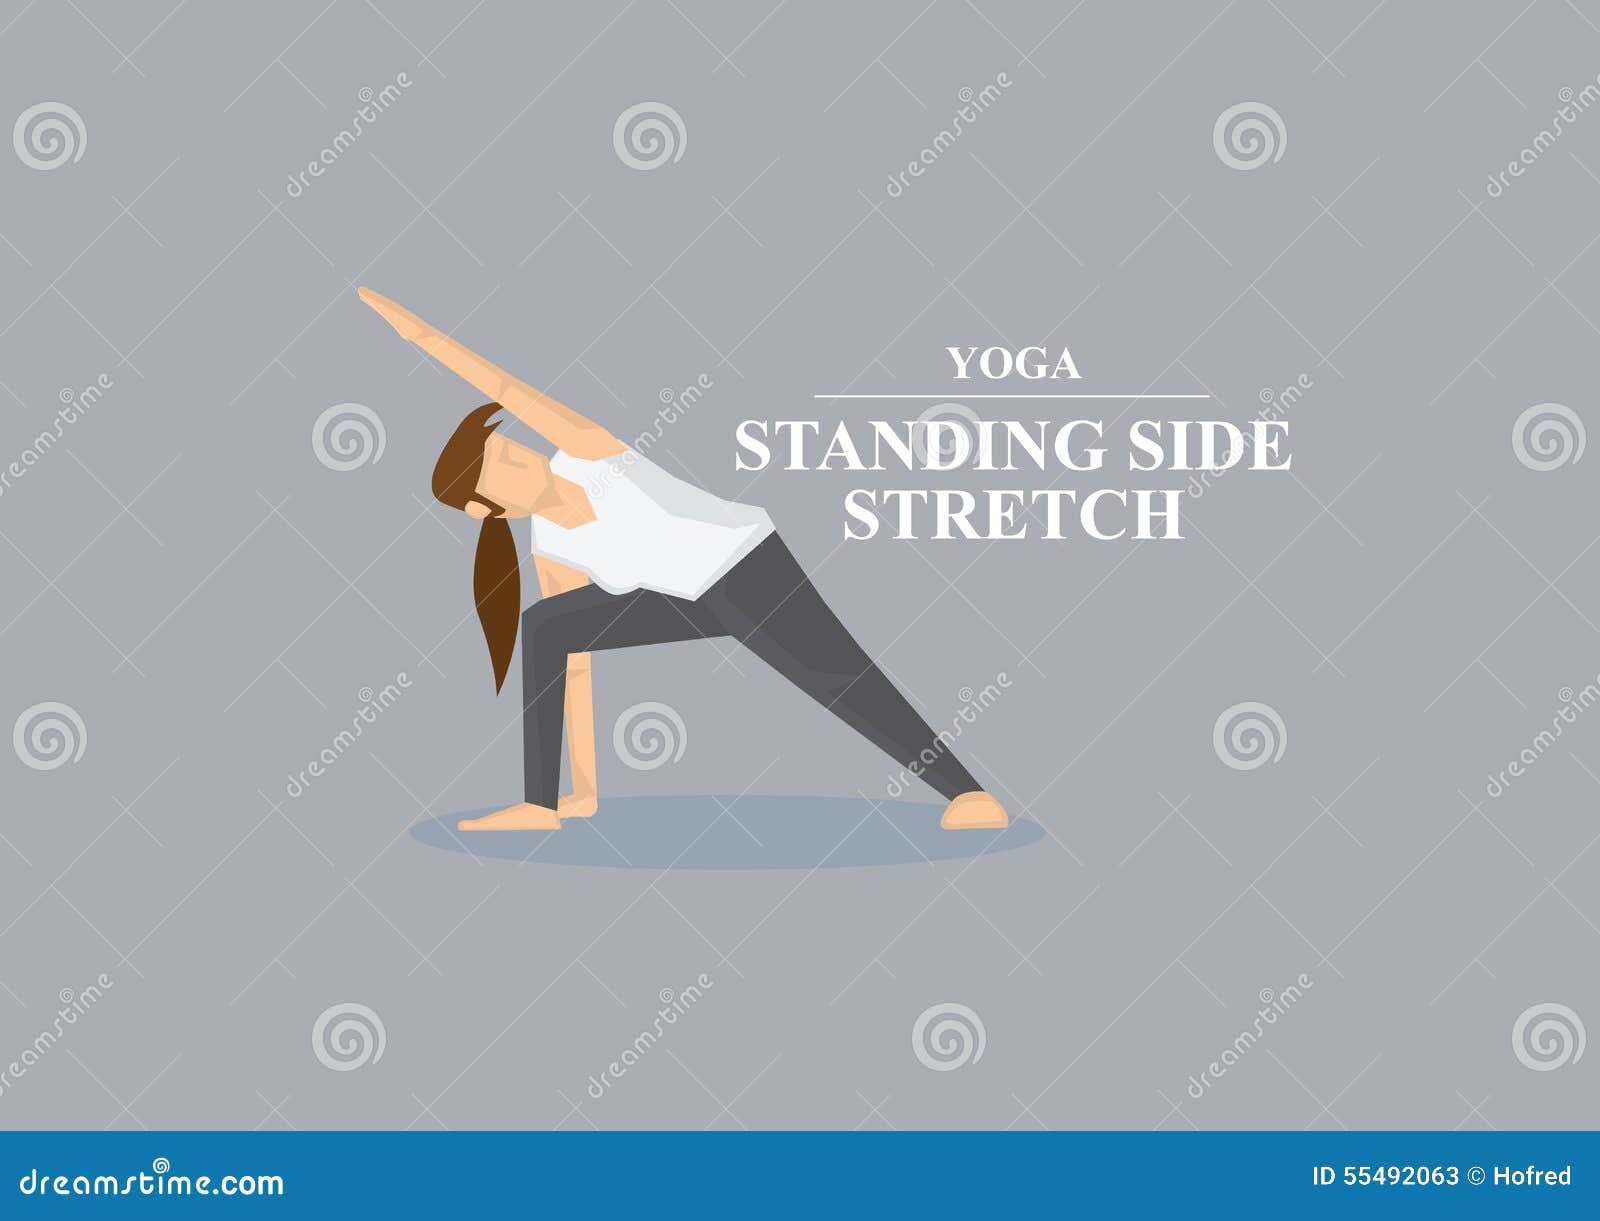 Yoga Asana Standing Side Stretch Pose Vector Illustration Stock